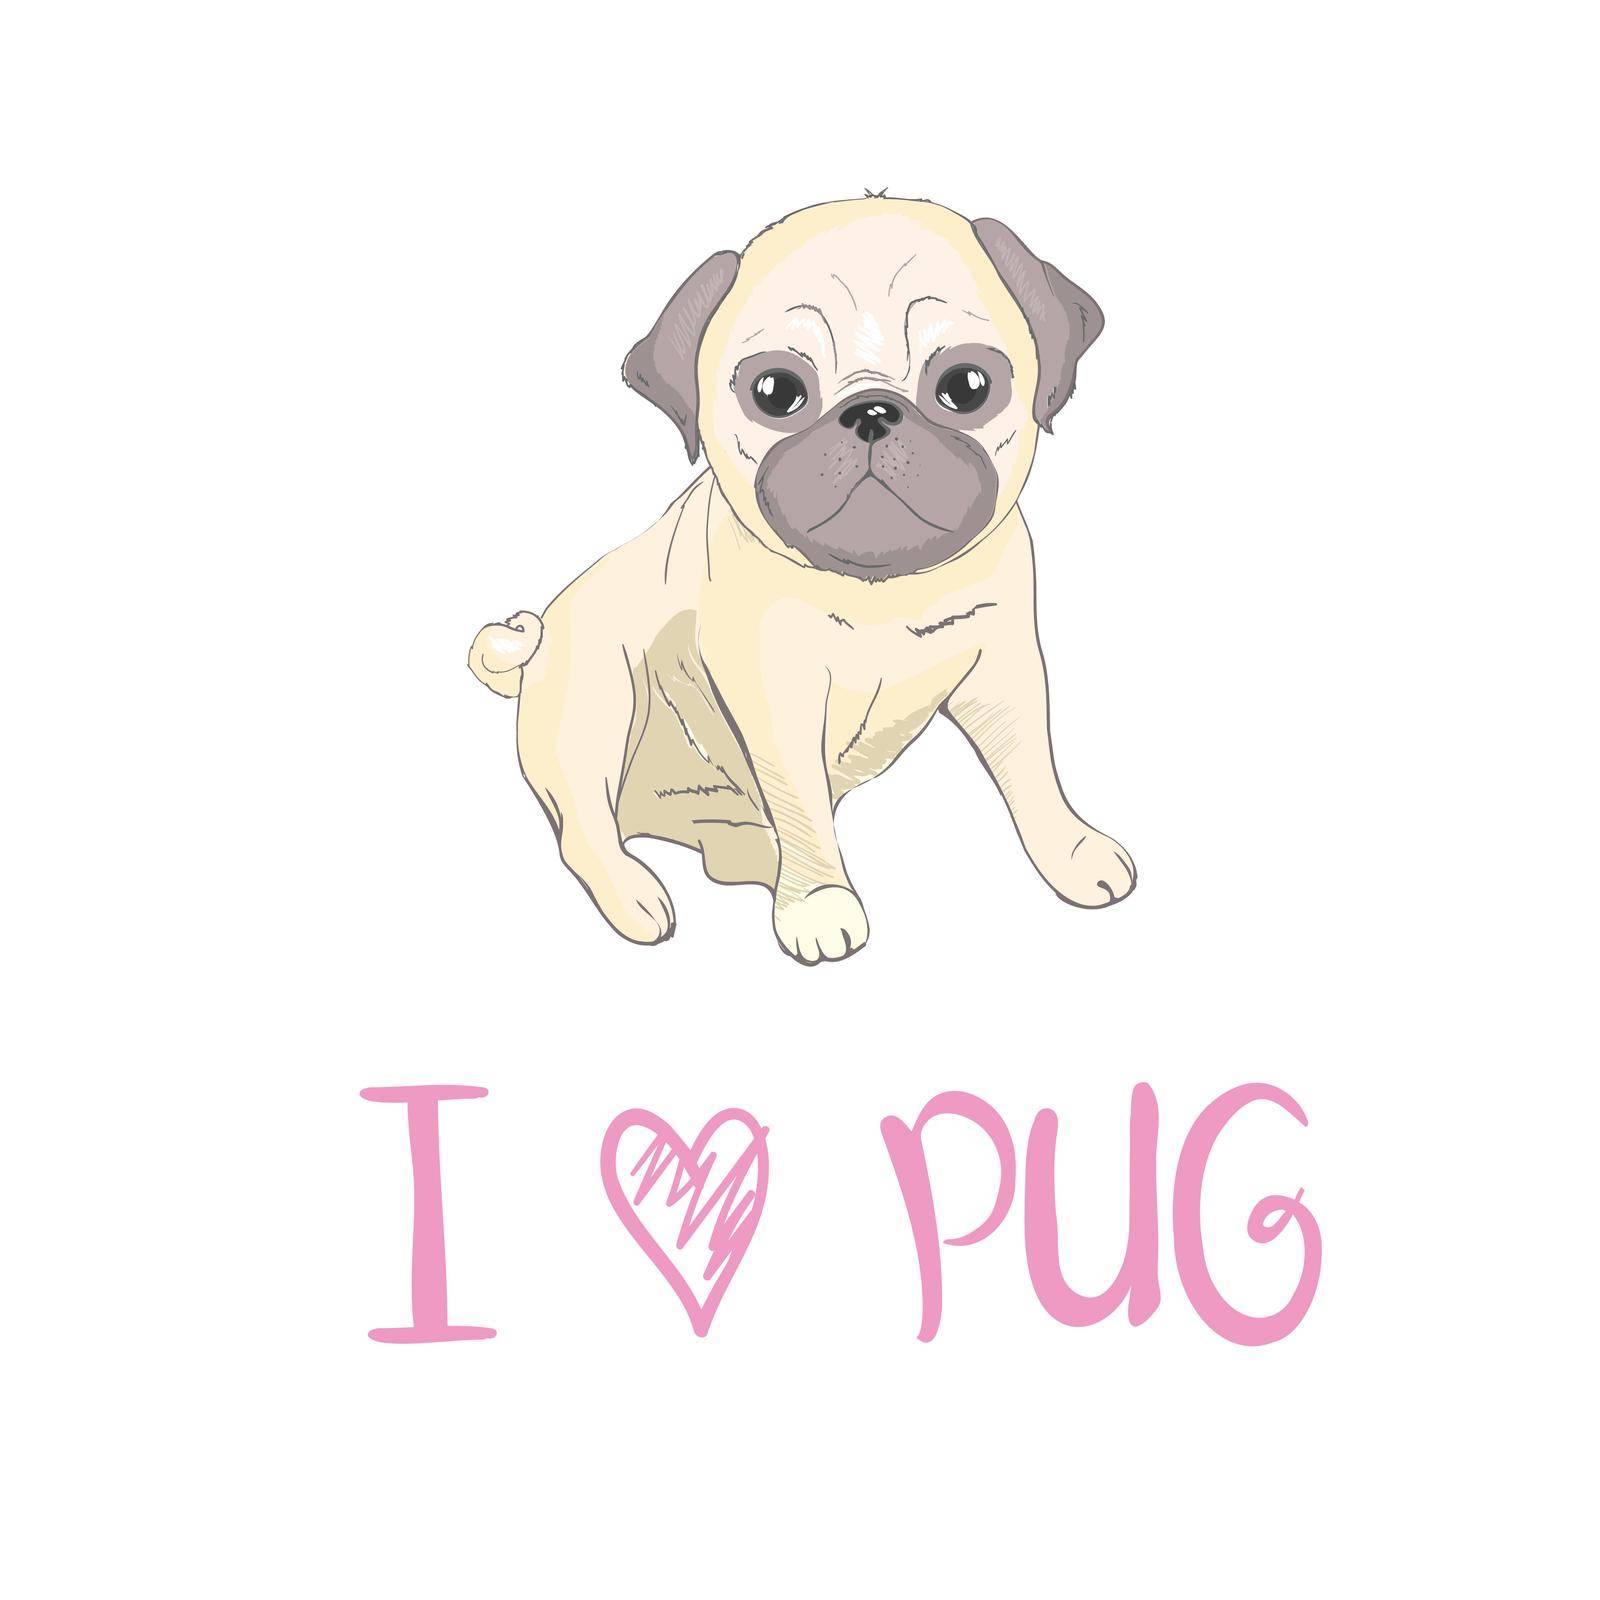 Pug Puppy, illustration, vector cute dog animal